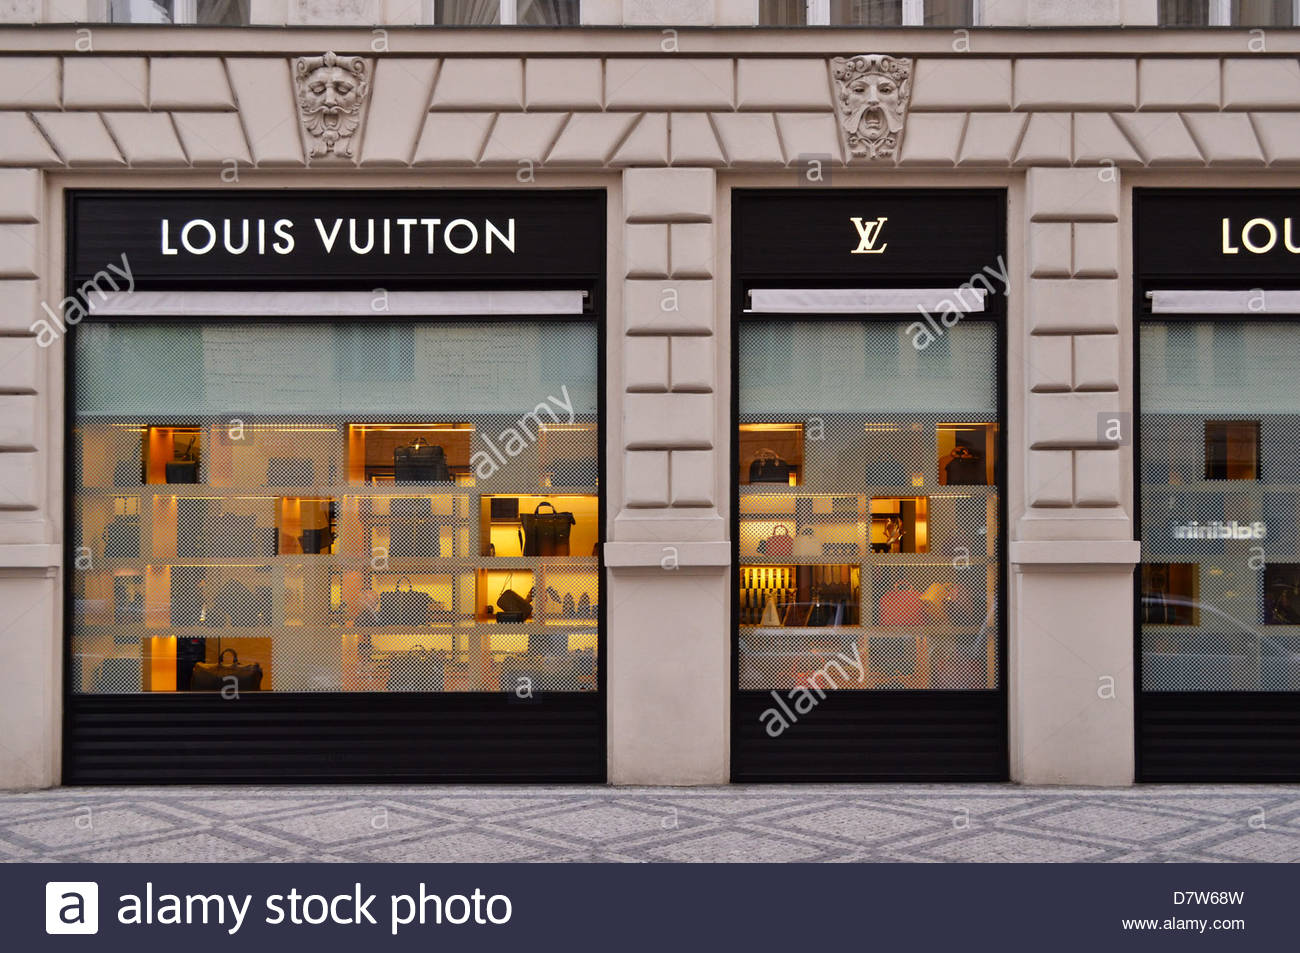 rive ned Betjene konservativ Louis Vuitton (lv) In Czech Republic Locations & Store Hours | The Art of  Mike Mignola